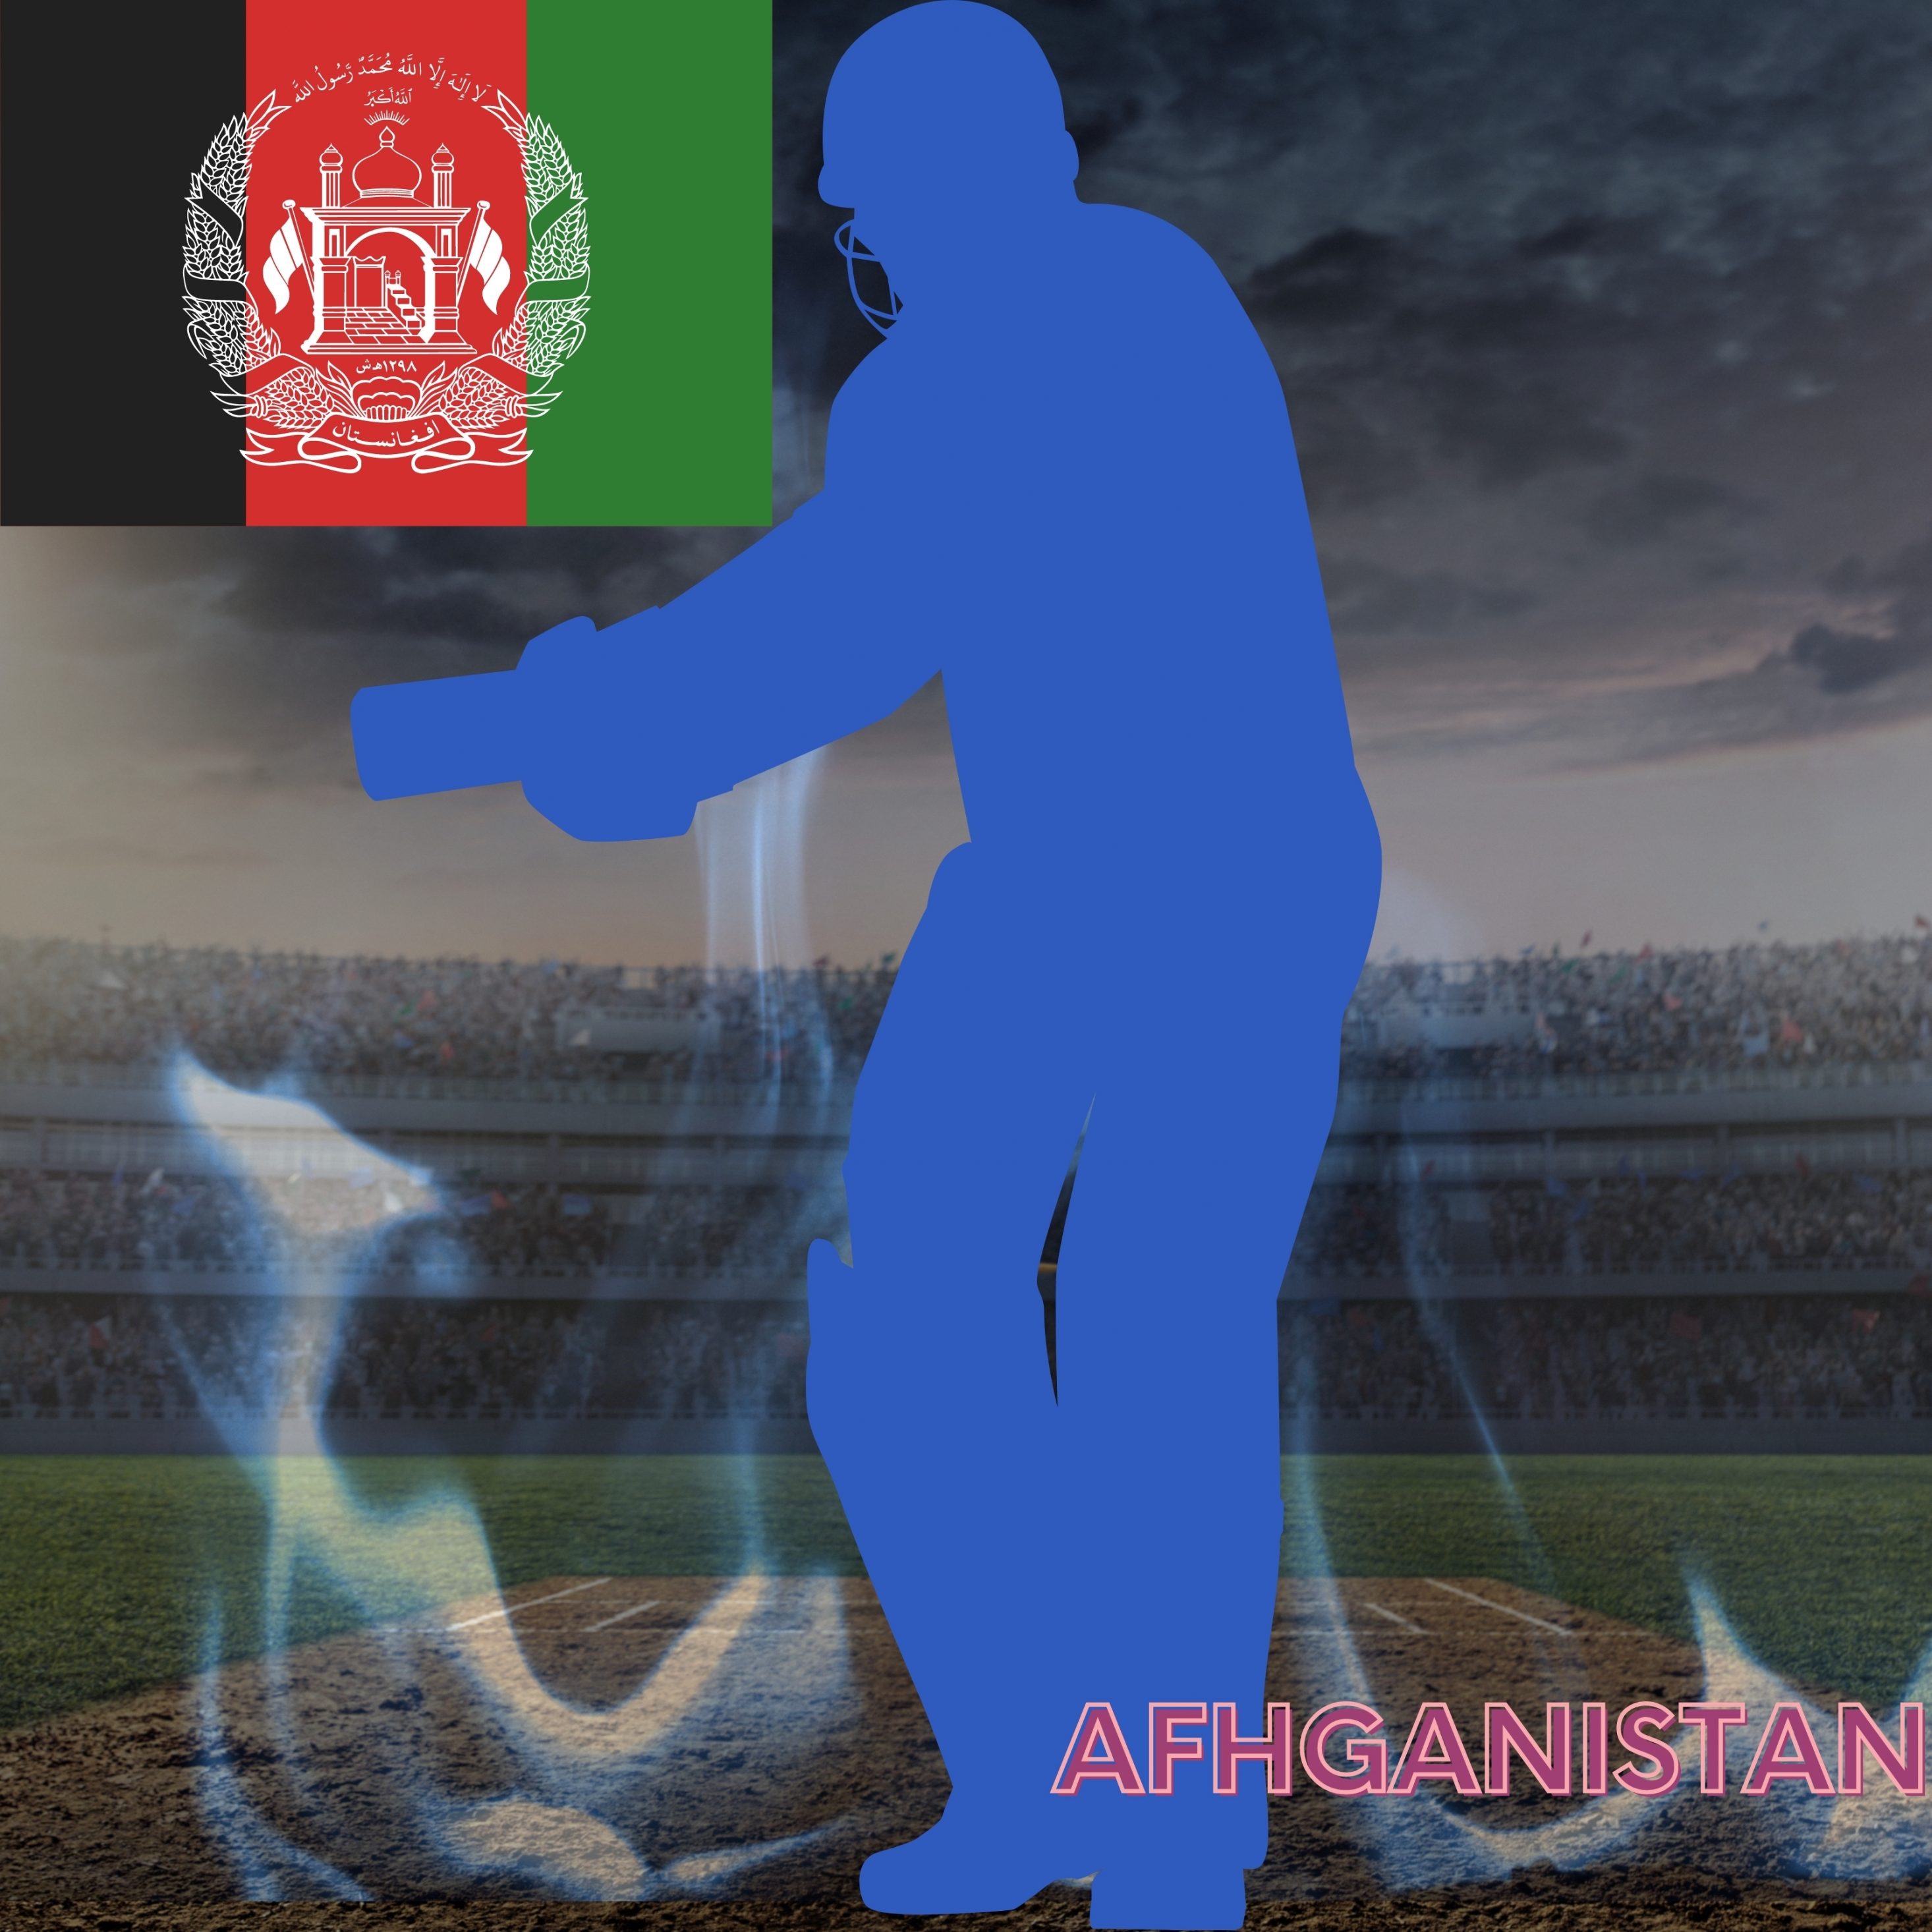 2932x2932 iPad Pro wallpaper 4k Afhganistan Cricket Stadium iPad Wallpaper 2932x2932 pixels resolution